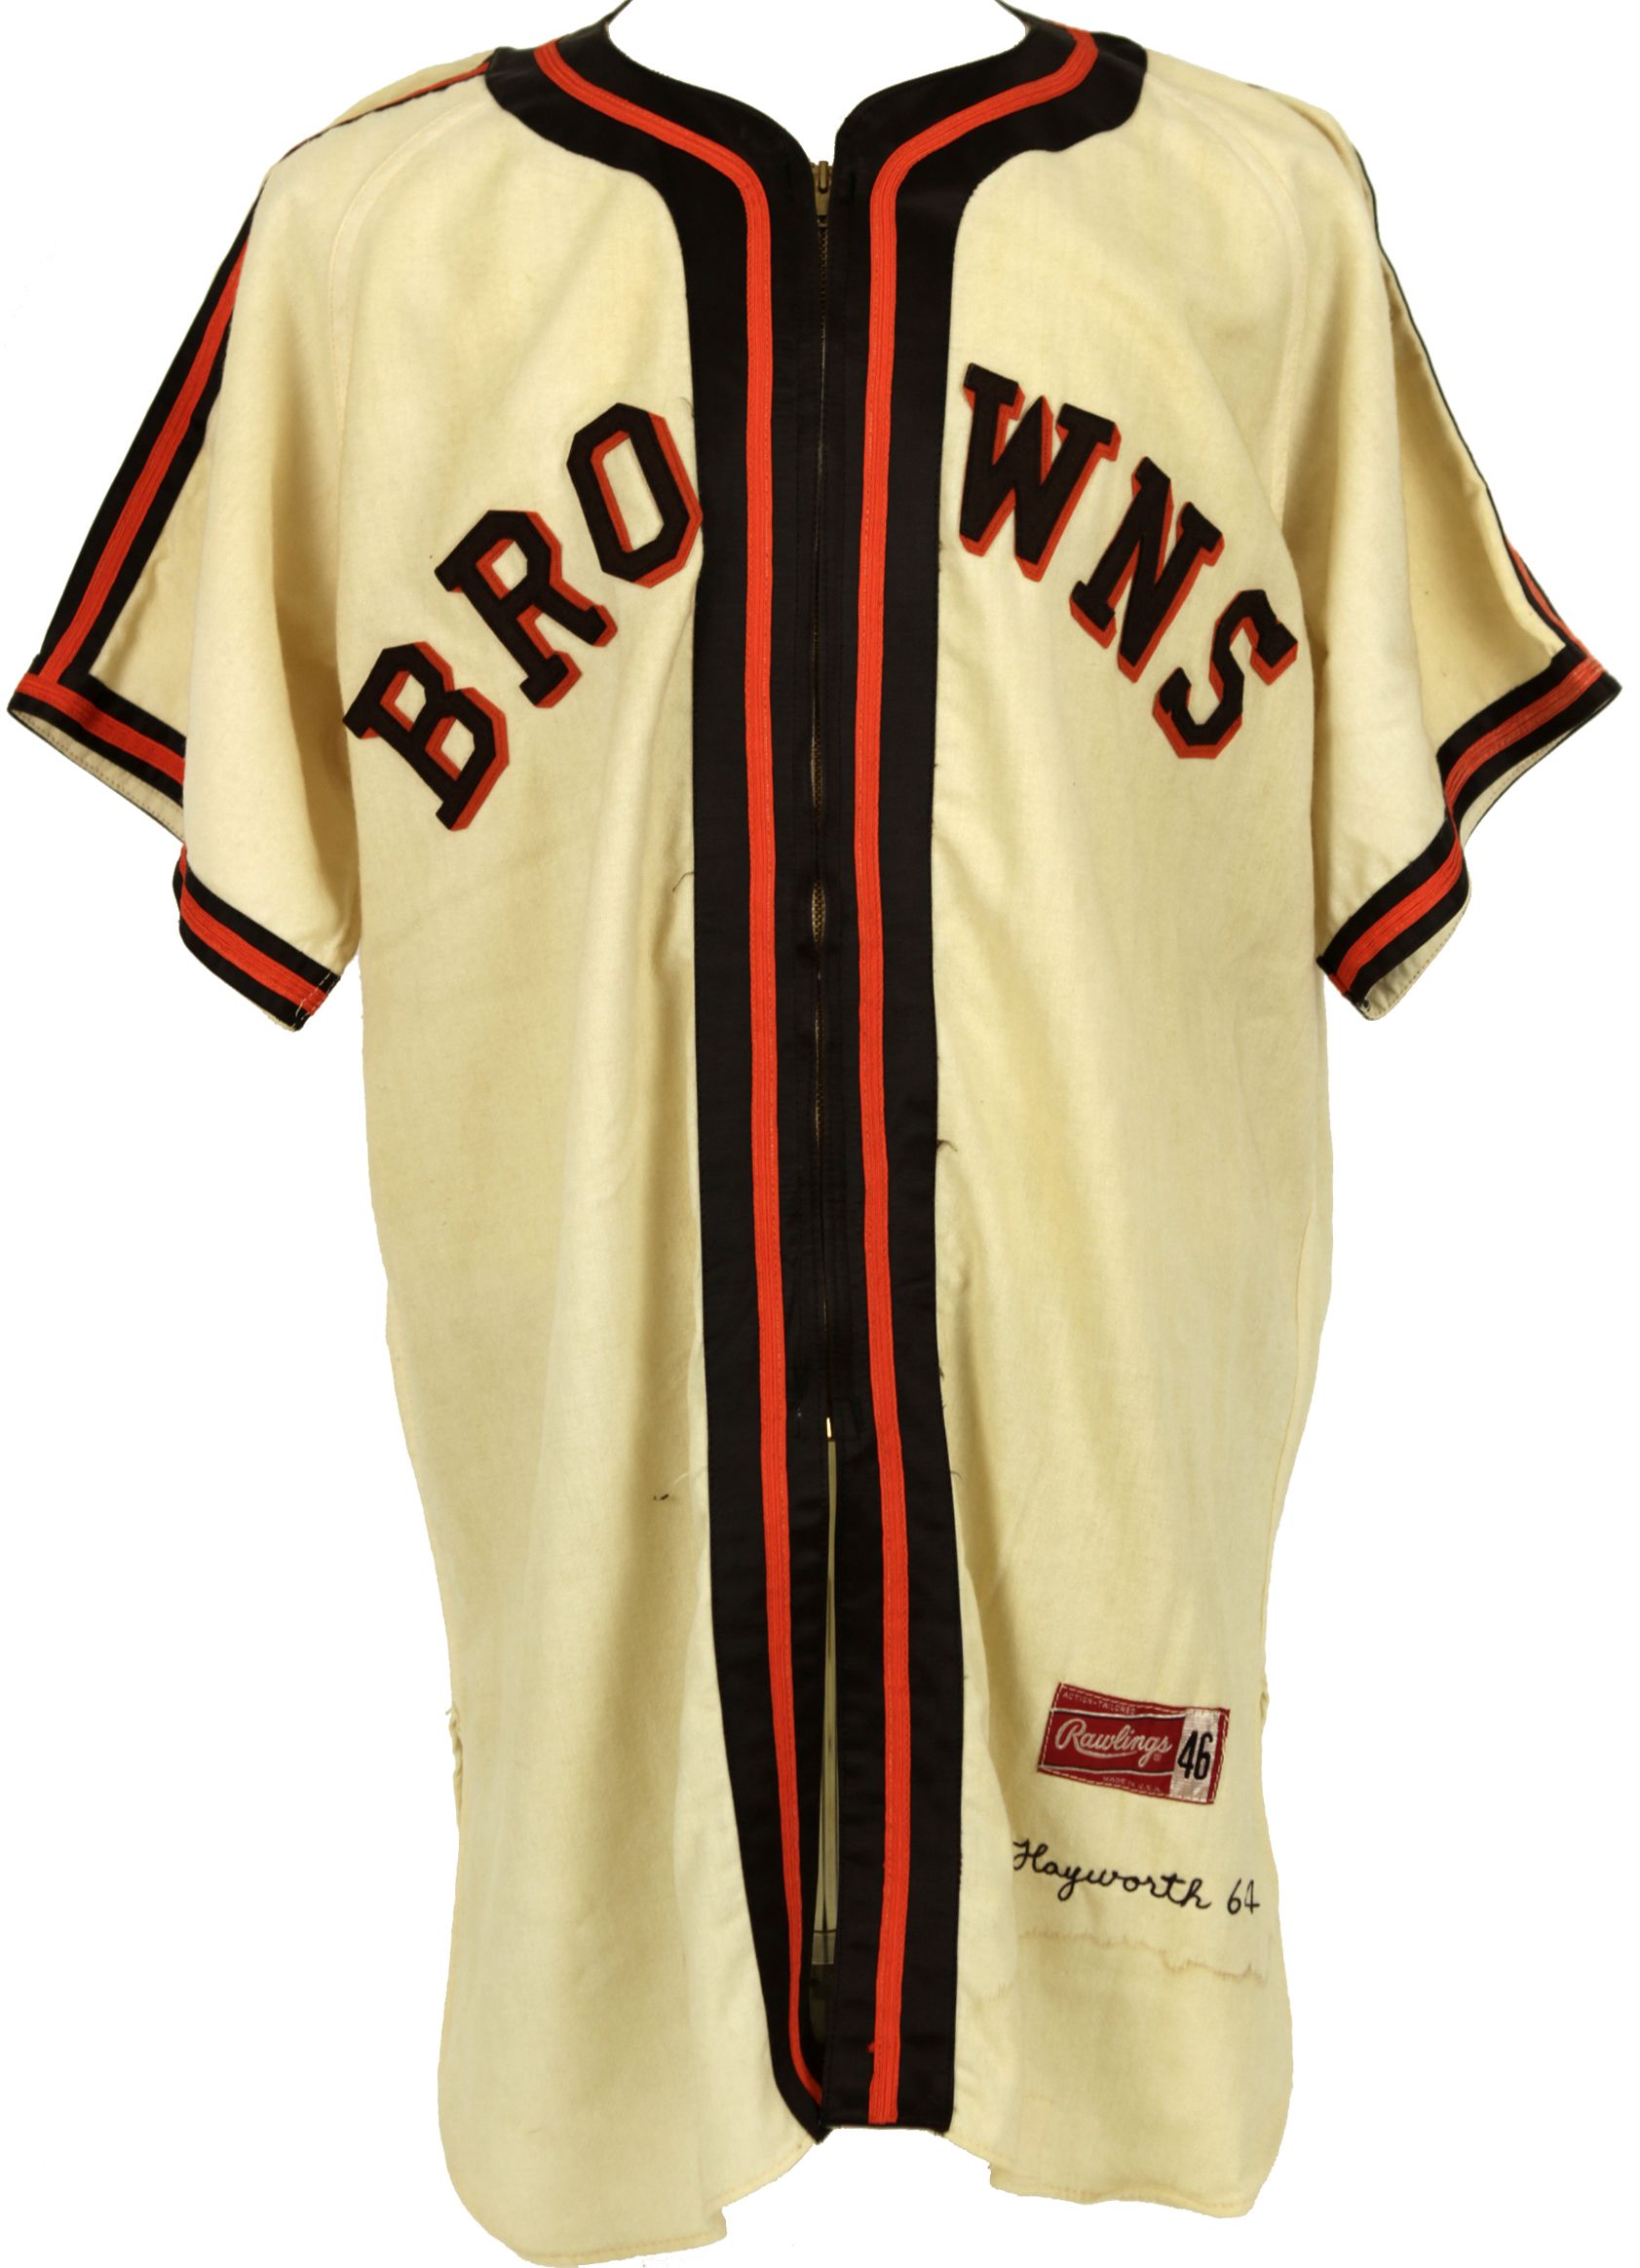 st louis browns jersey